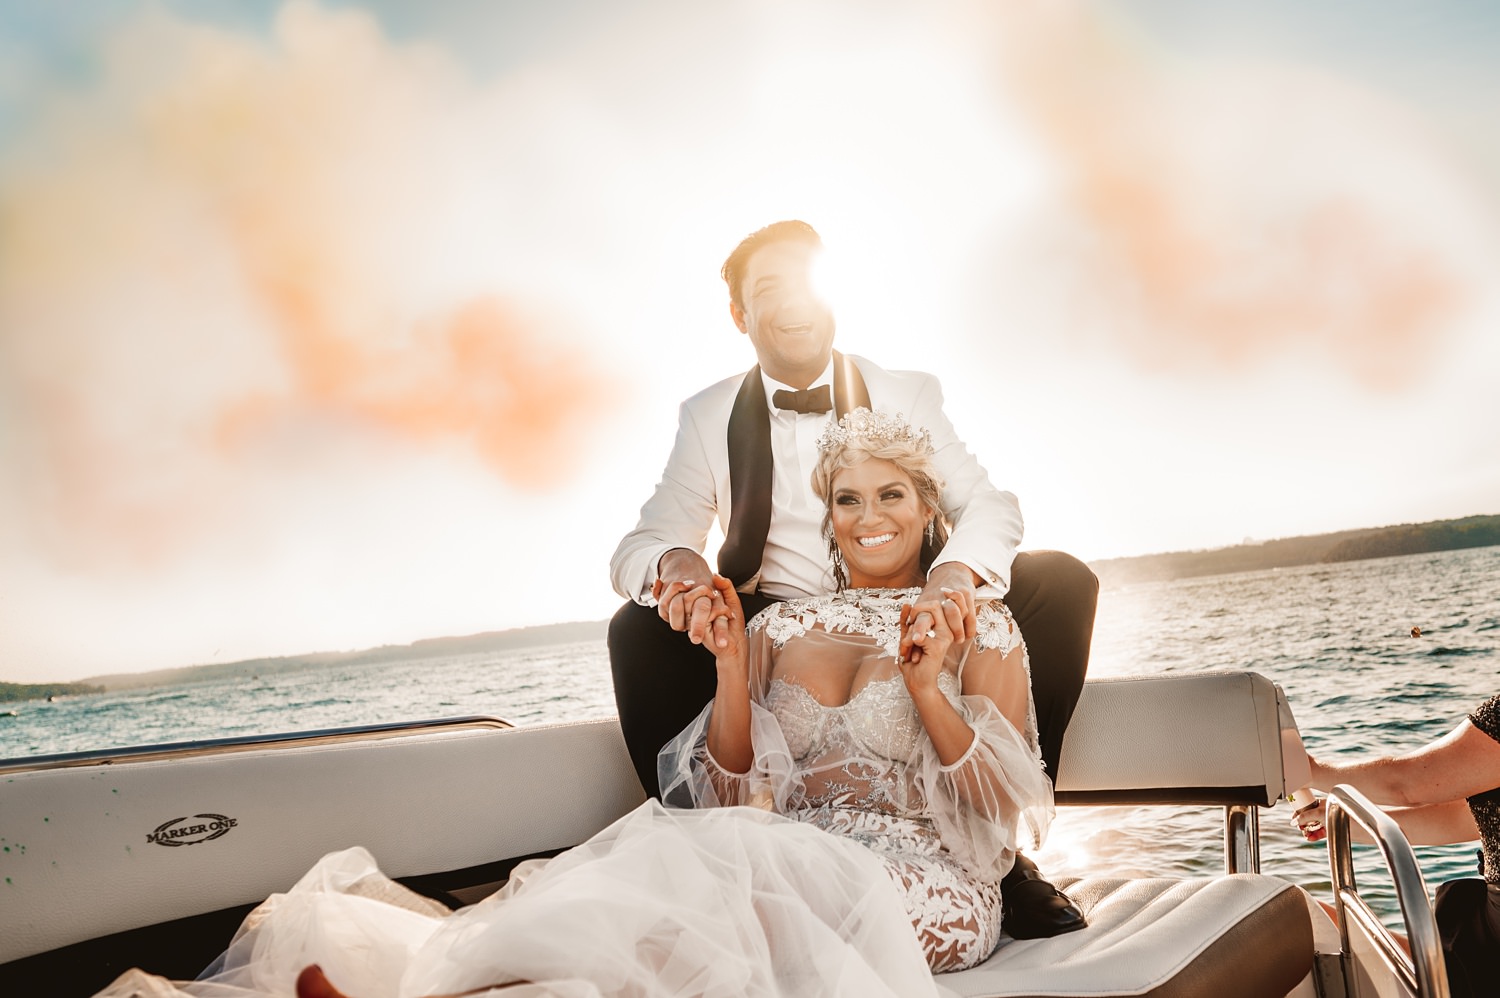 Lake Geneva Micro Wedding - The Adamkovi ceremony on deck smoke bombs on a boat